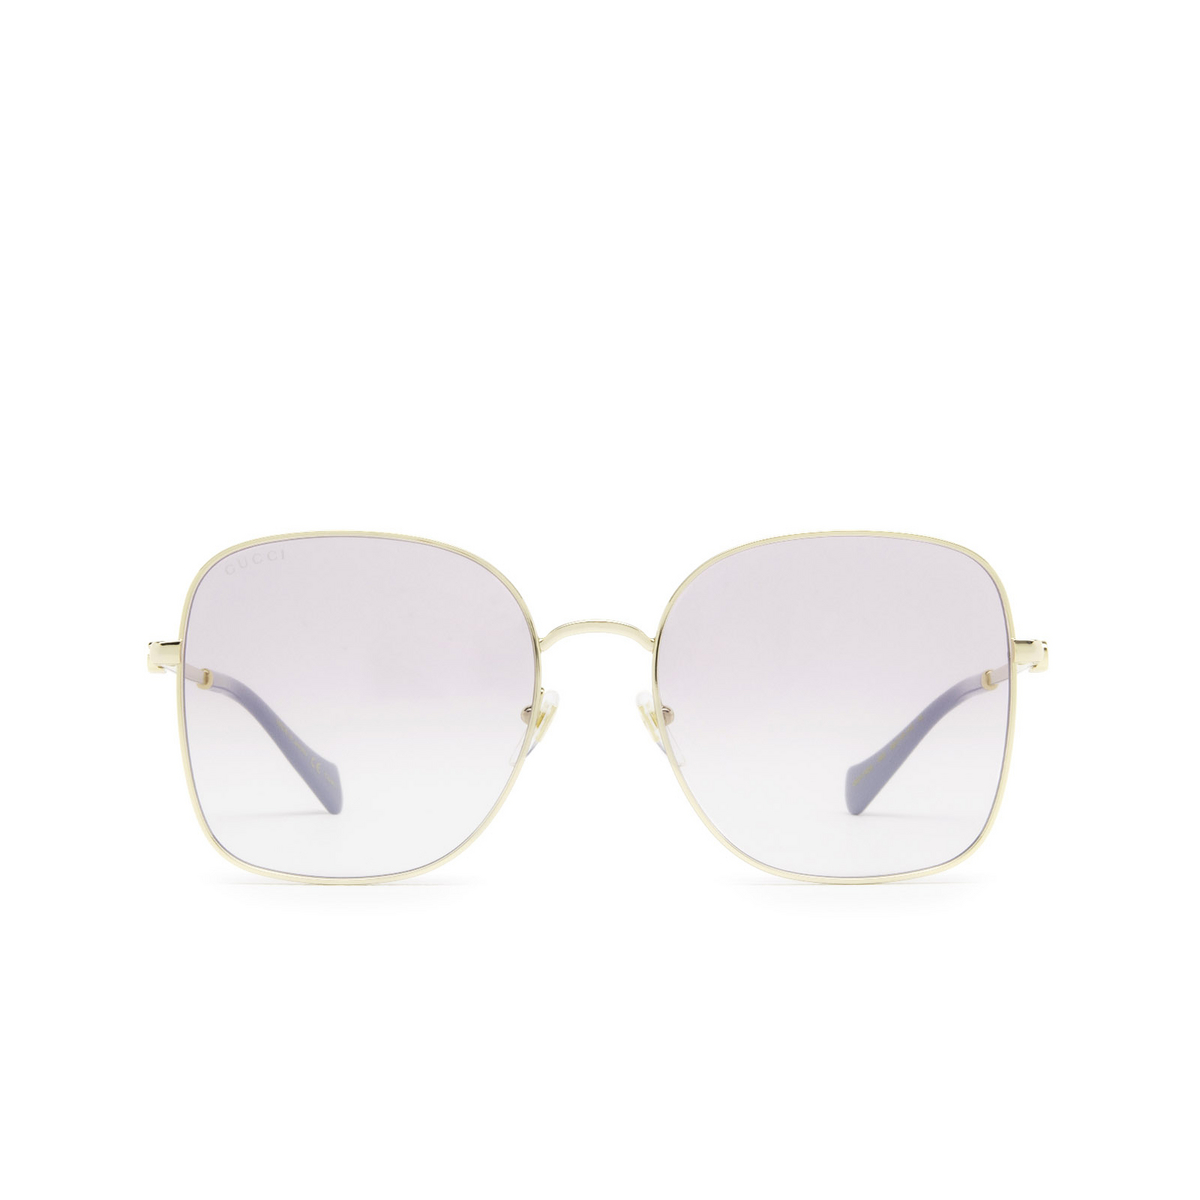 Gucci® Square Sunglasses: GG1143S color Gold 003 - front view.